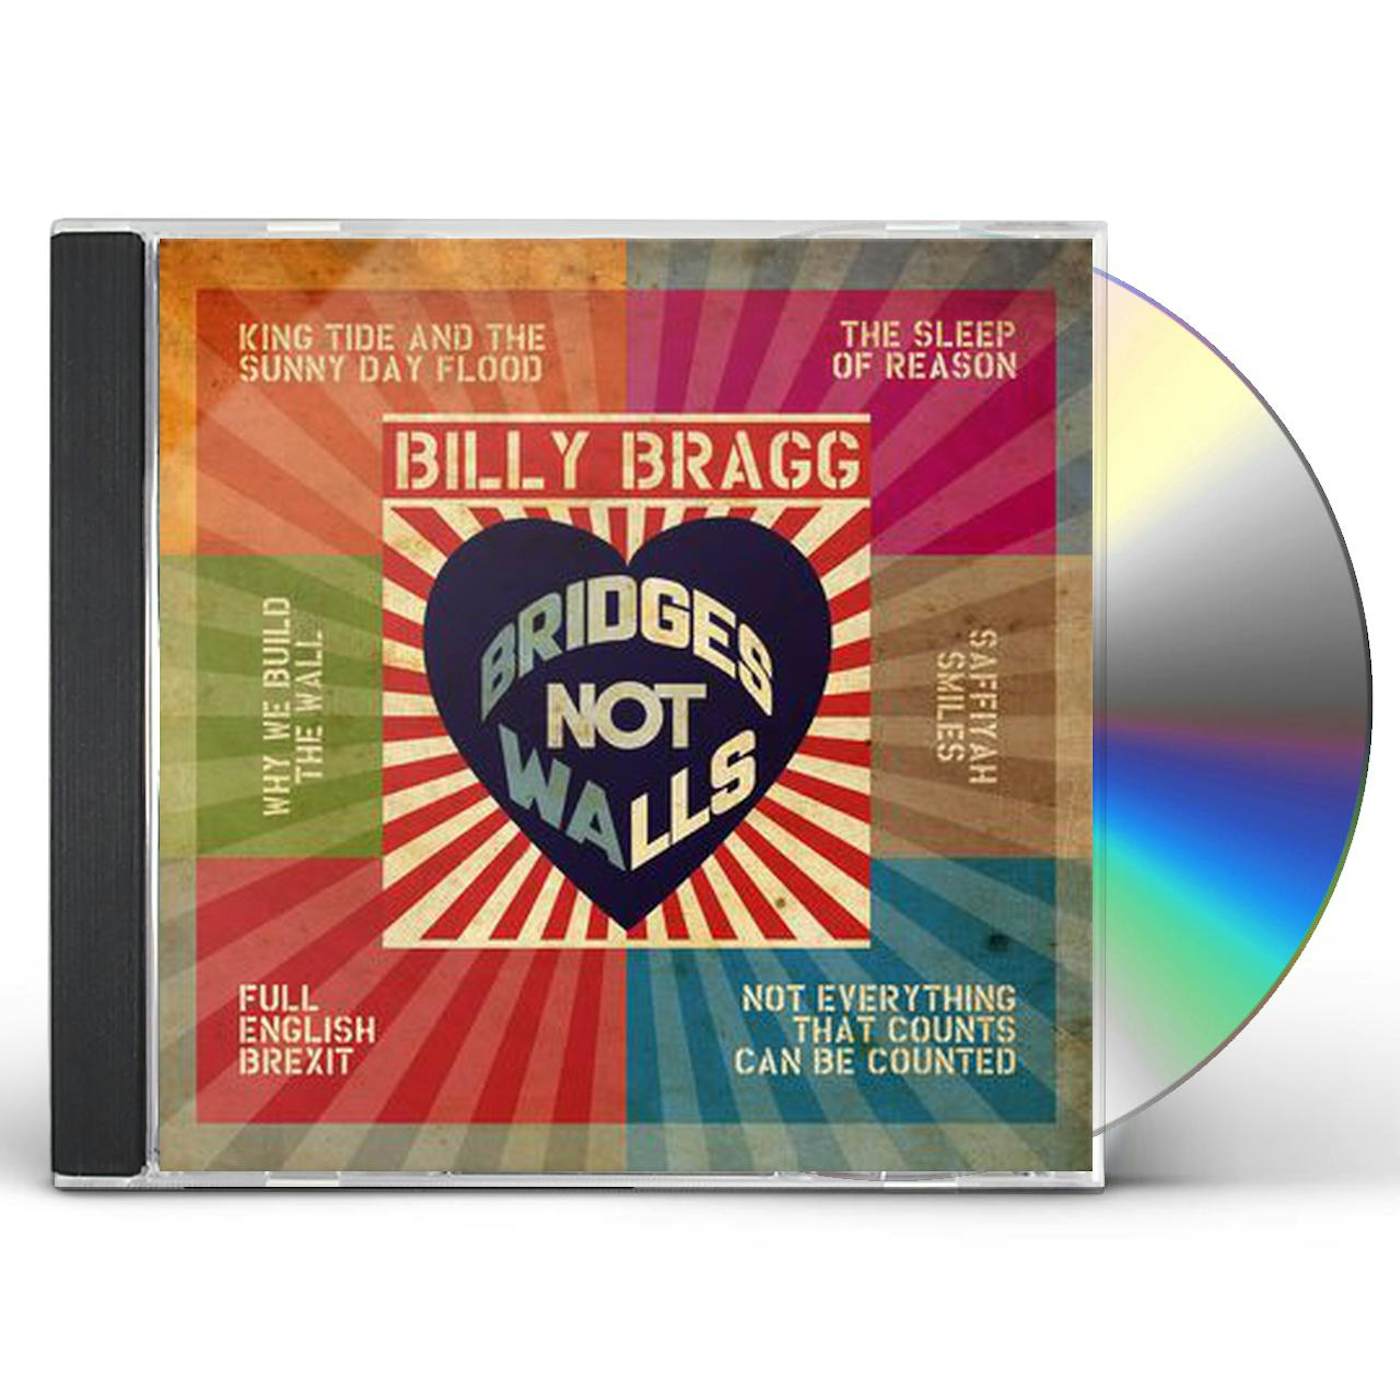 Billy Bragg BRIDGES NOT WALLS CD